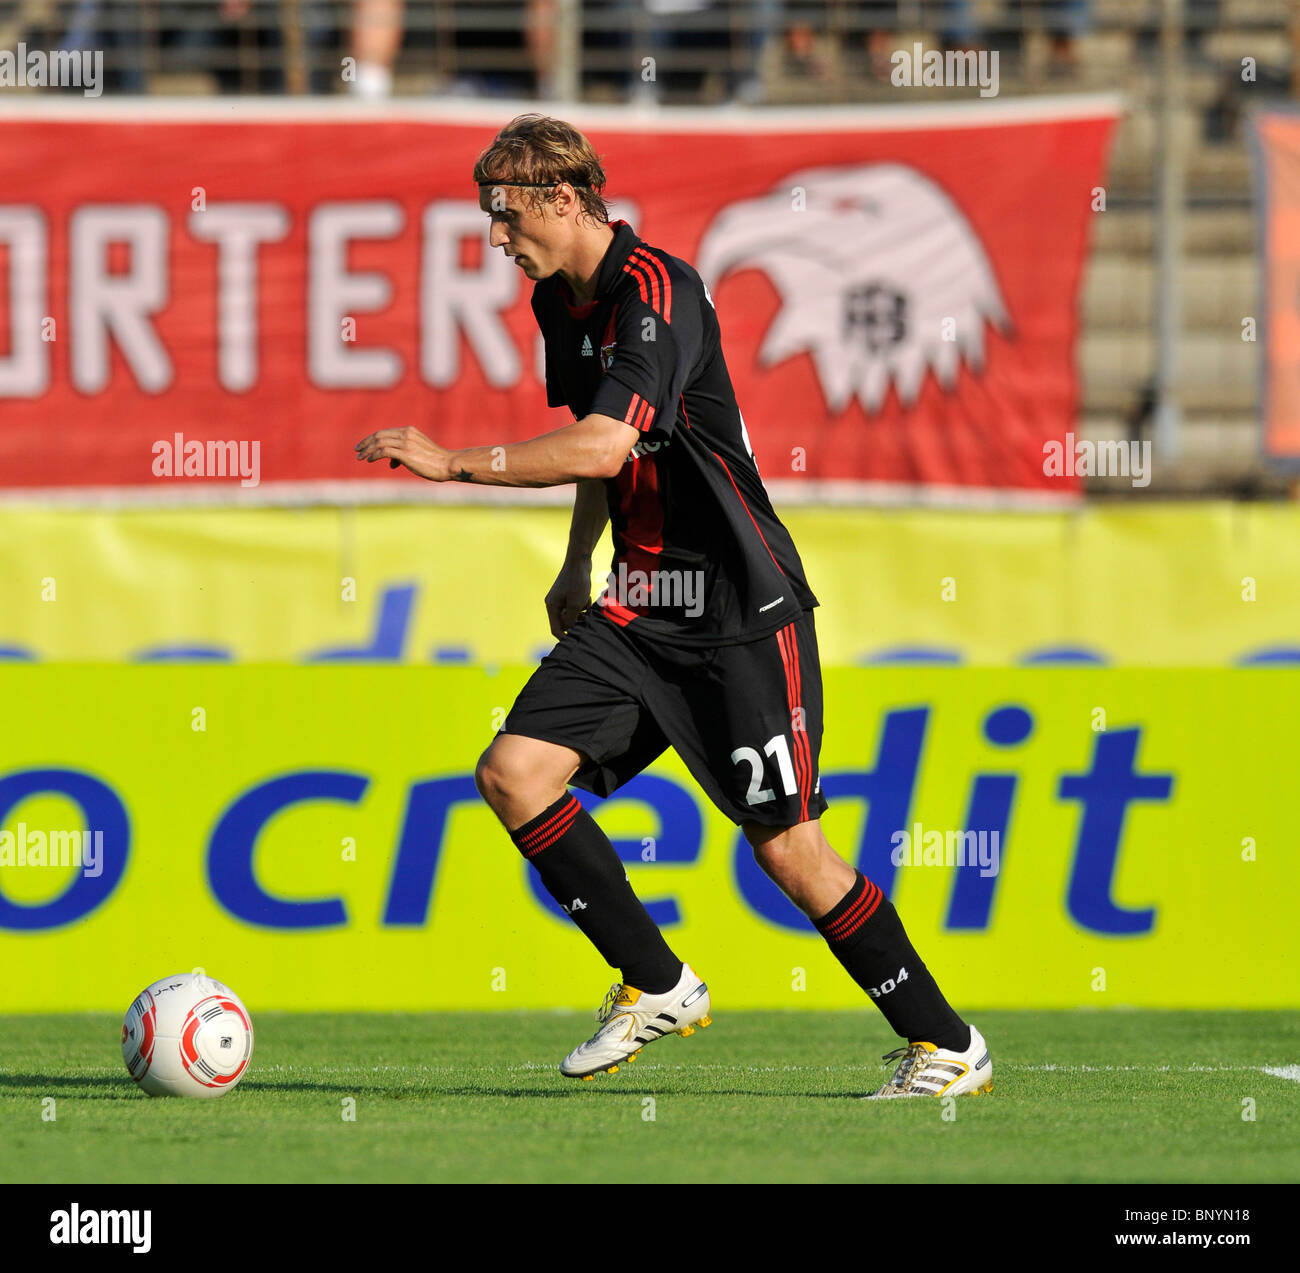 Marcel RISSE, Bayer 04 Leverkusen, german Bundesliga, Germany Stock Photo